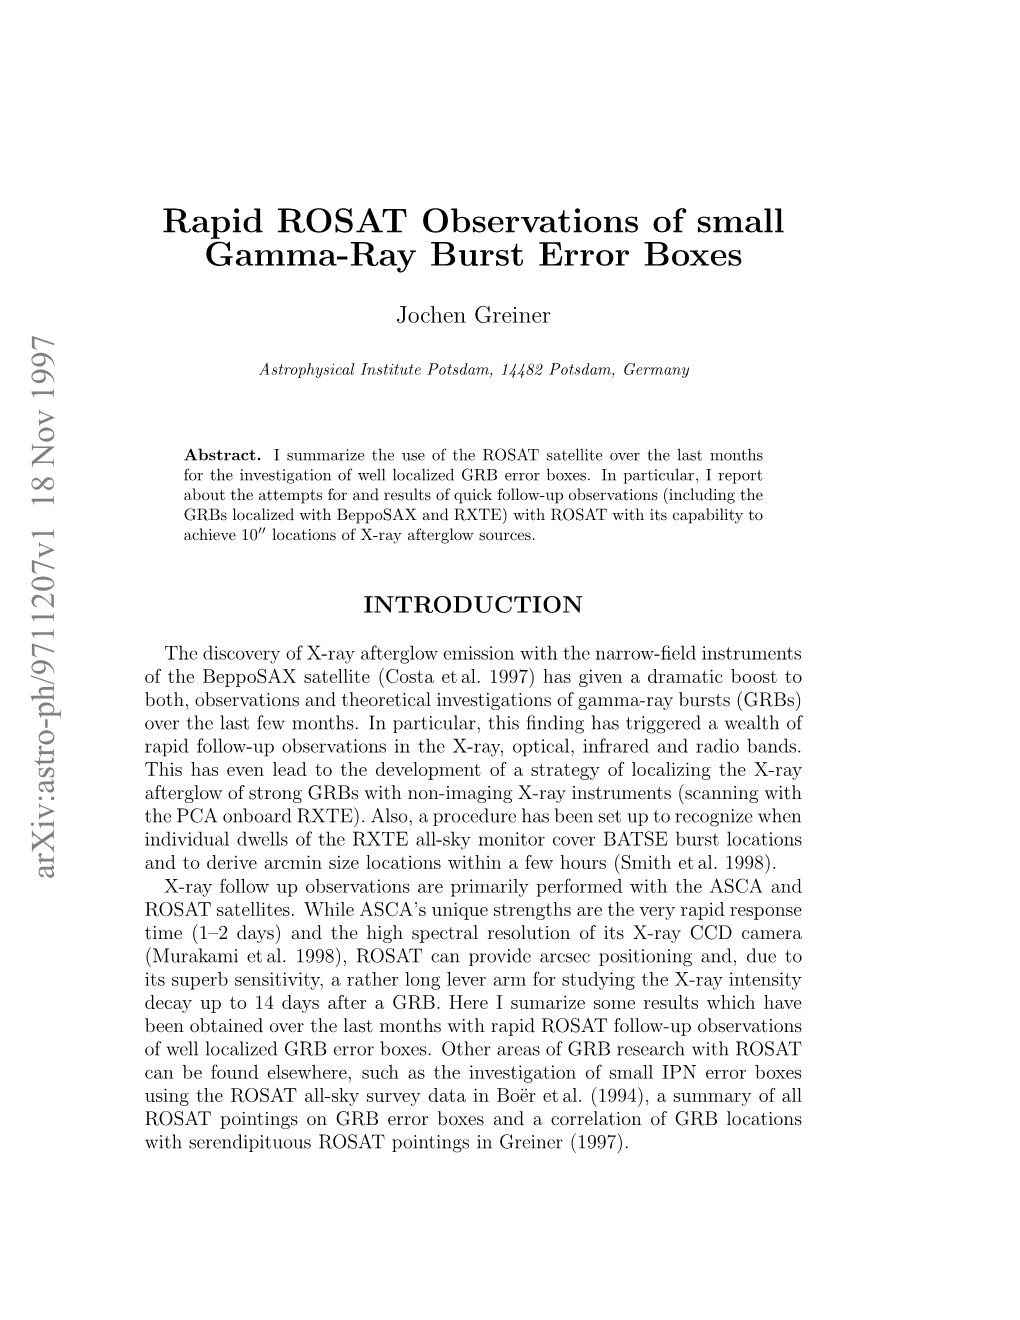 Rapid ROSAT Observations of Small Gamma-Ray Burst Error Boxes